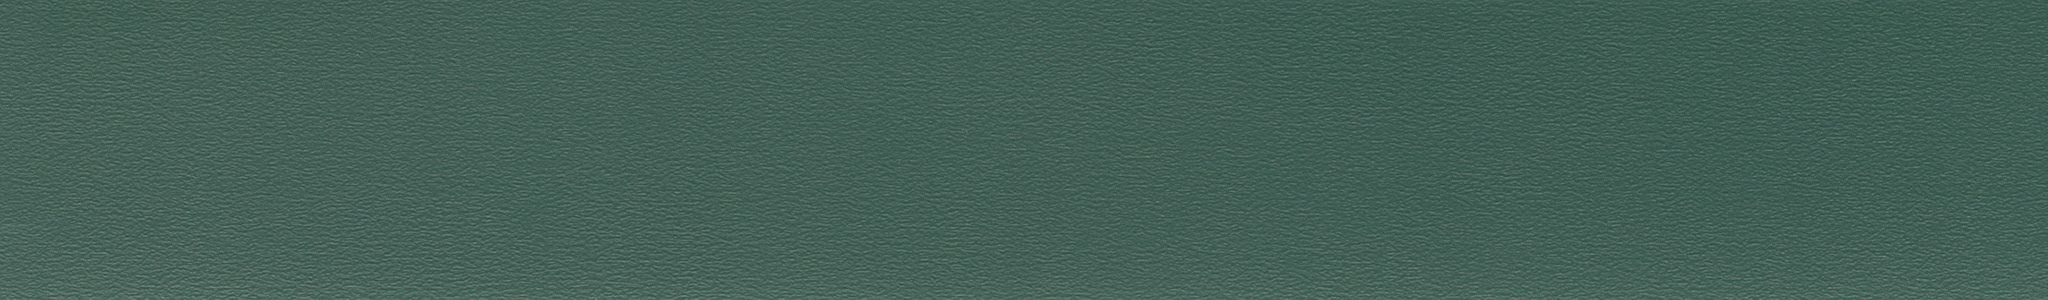 ABS K520 SU Dark Emerald 22x0,45mm HU 160520